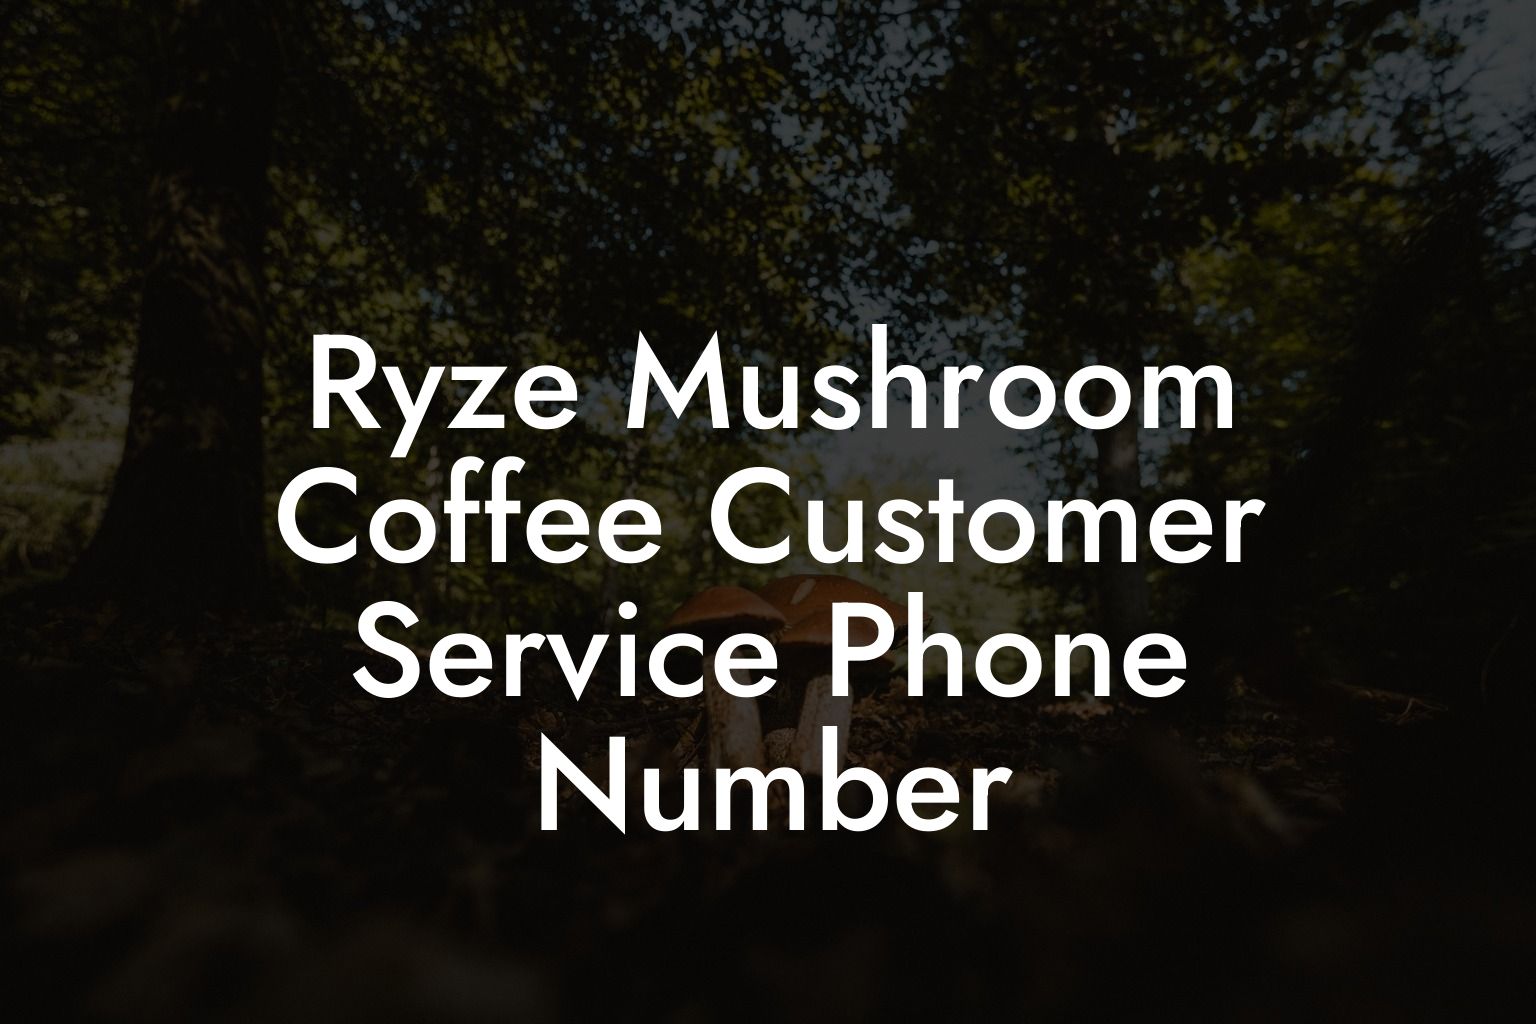 Ryze Mushroom Coffee Customer Service Phone Number